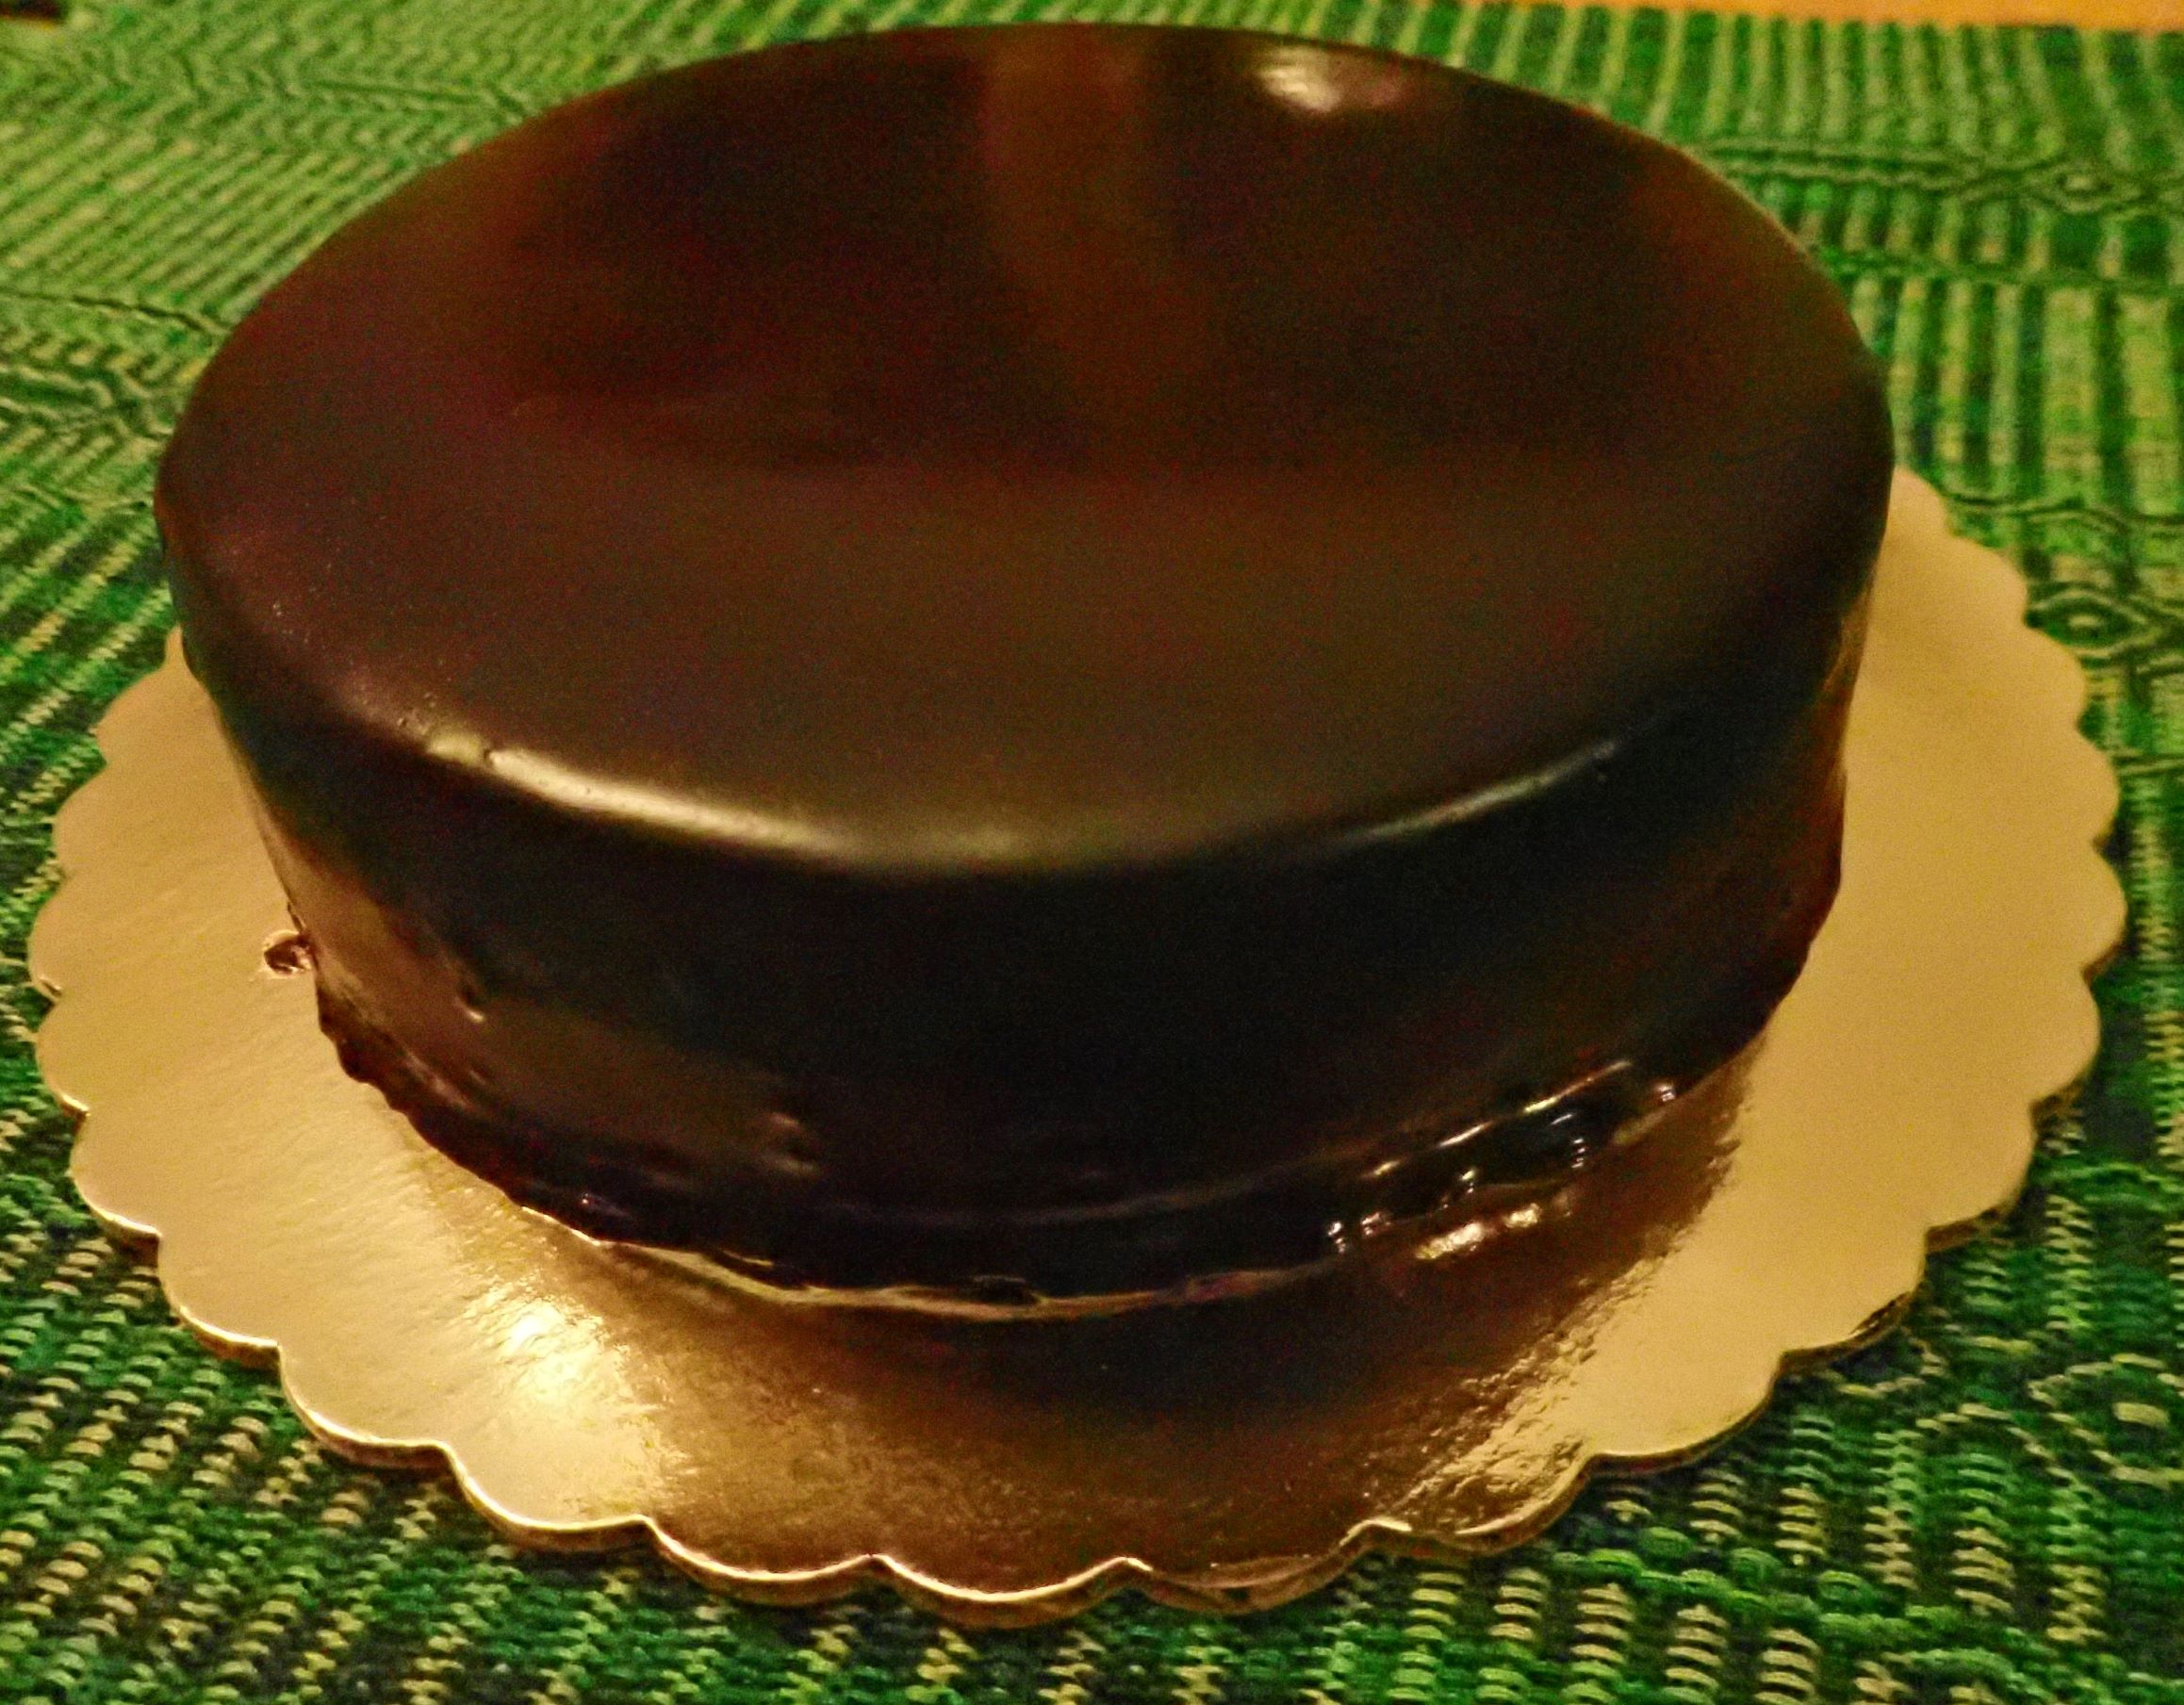 Common Good Bakery's chocolate cake